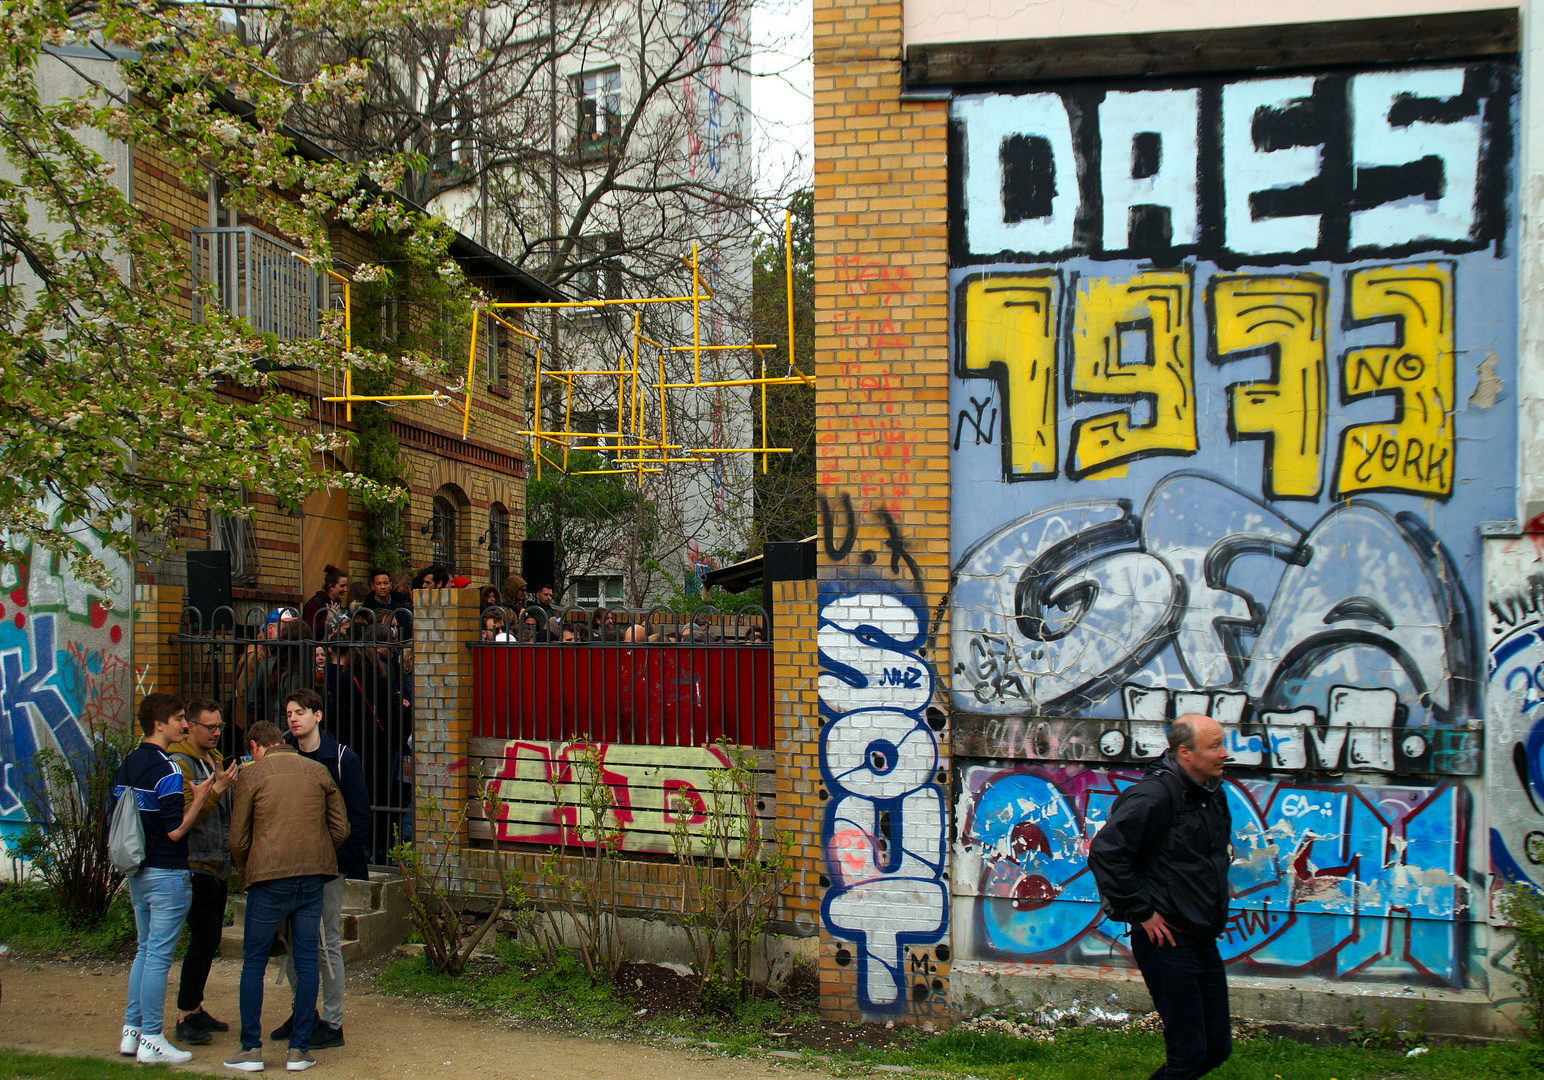 Berliner Graffiti: "NoYork 1973"